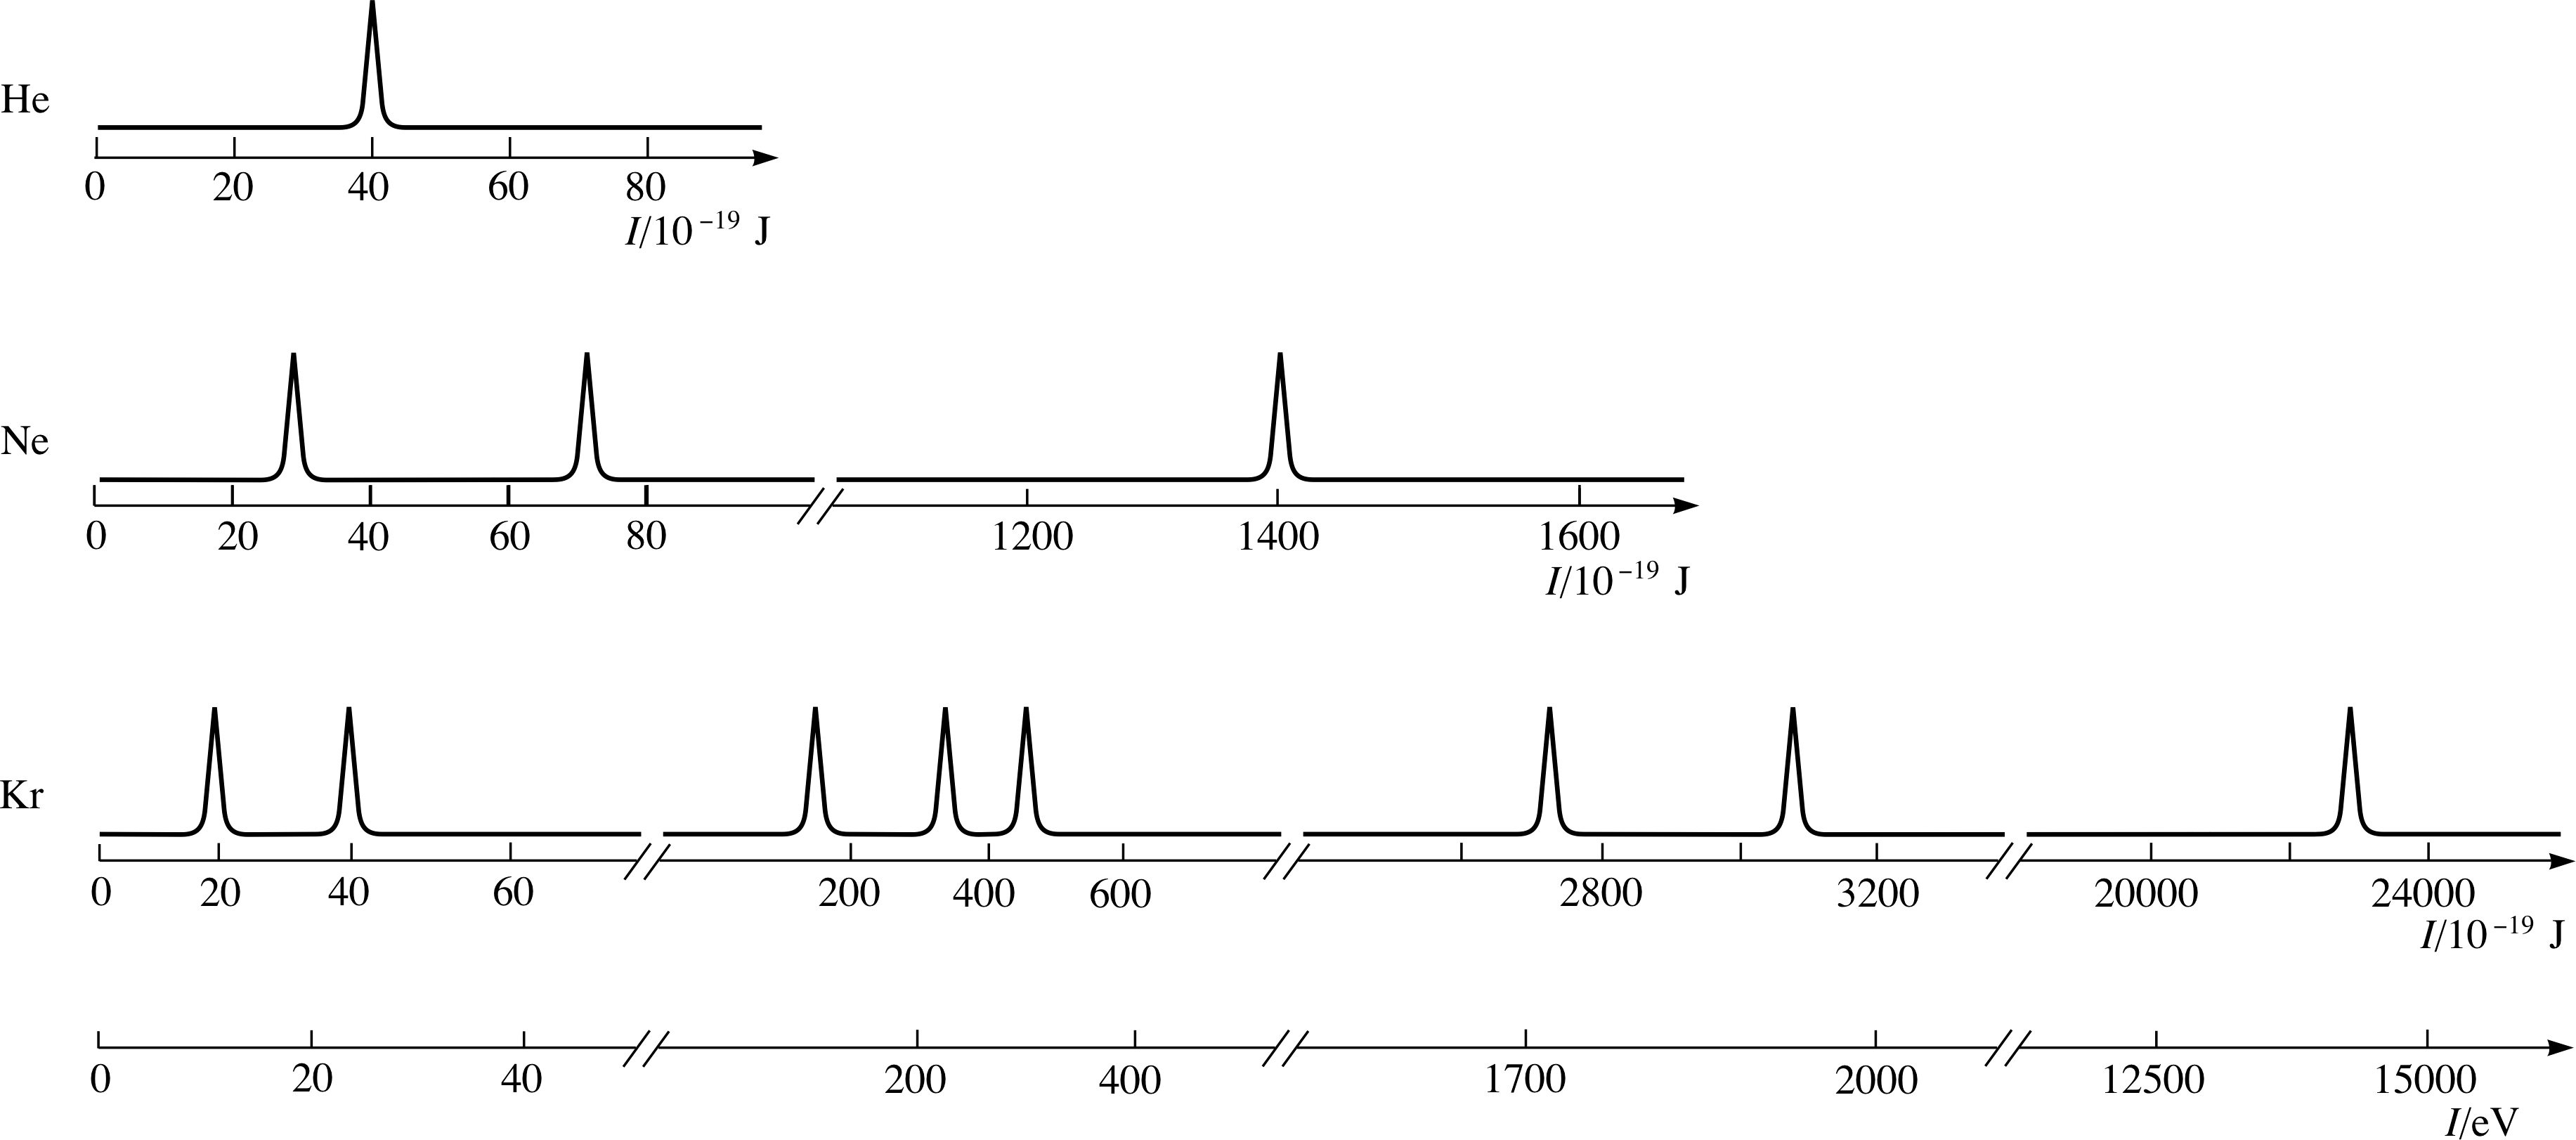 Photoelectron Spectroscopy Worksheet Answers Inspirational Electron Spectroscopy Worksheet Answers